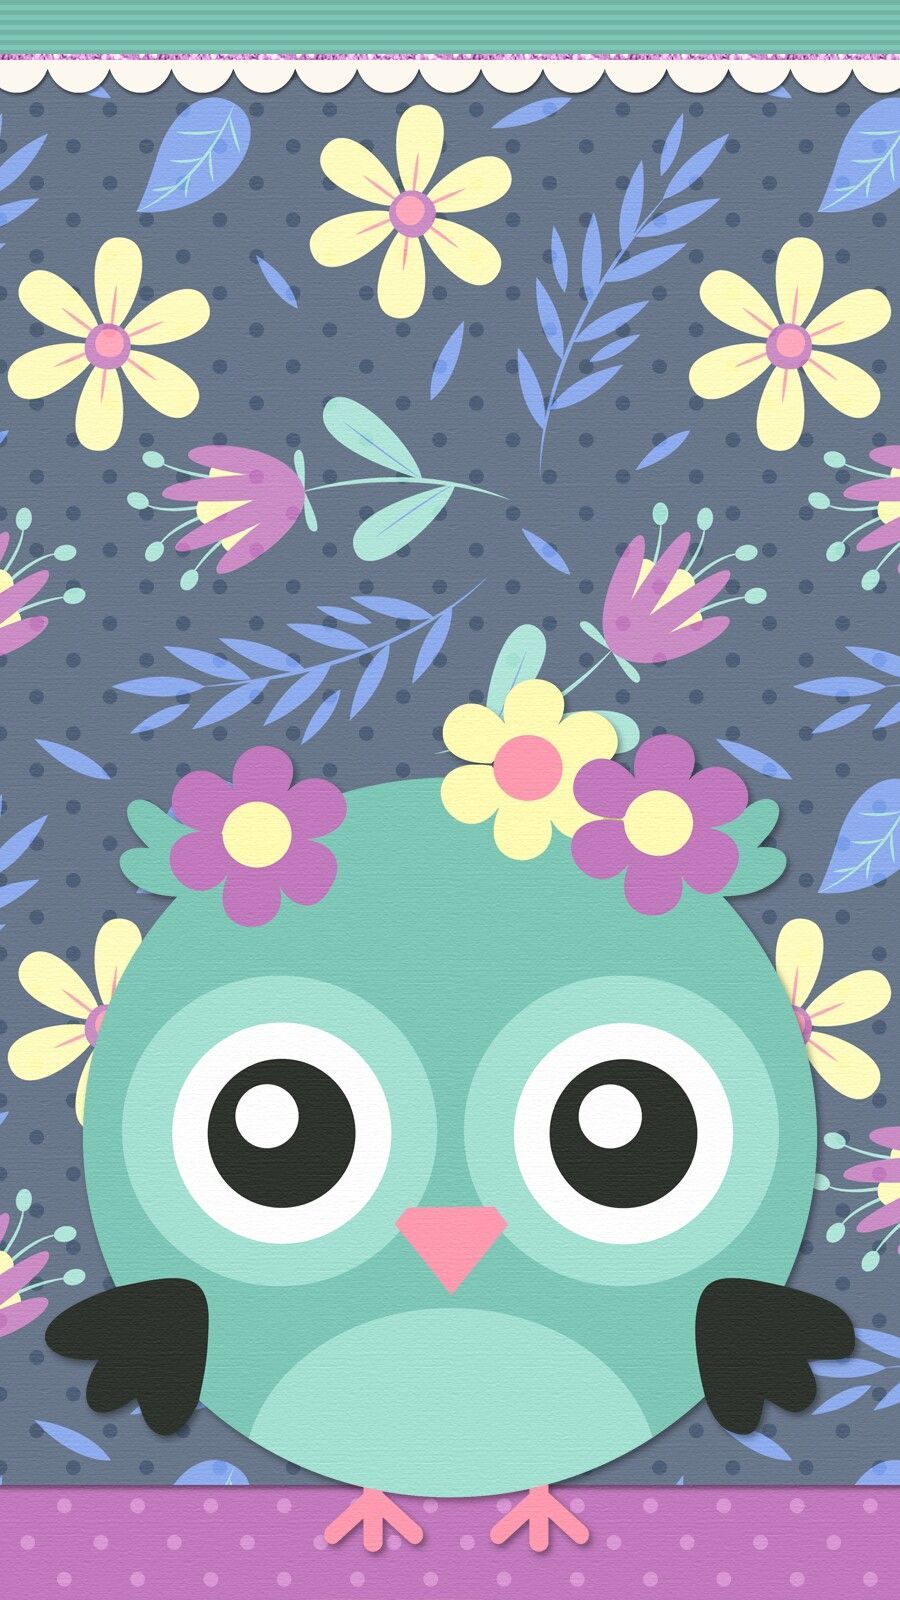 digitalcutewlls #wallpaper #spring #iPhone. Owl wallpaper iphone, Owl wallpaper, iPhone wallpaper